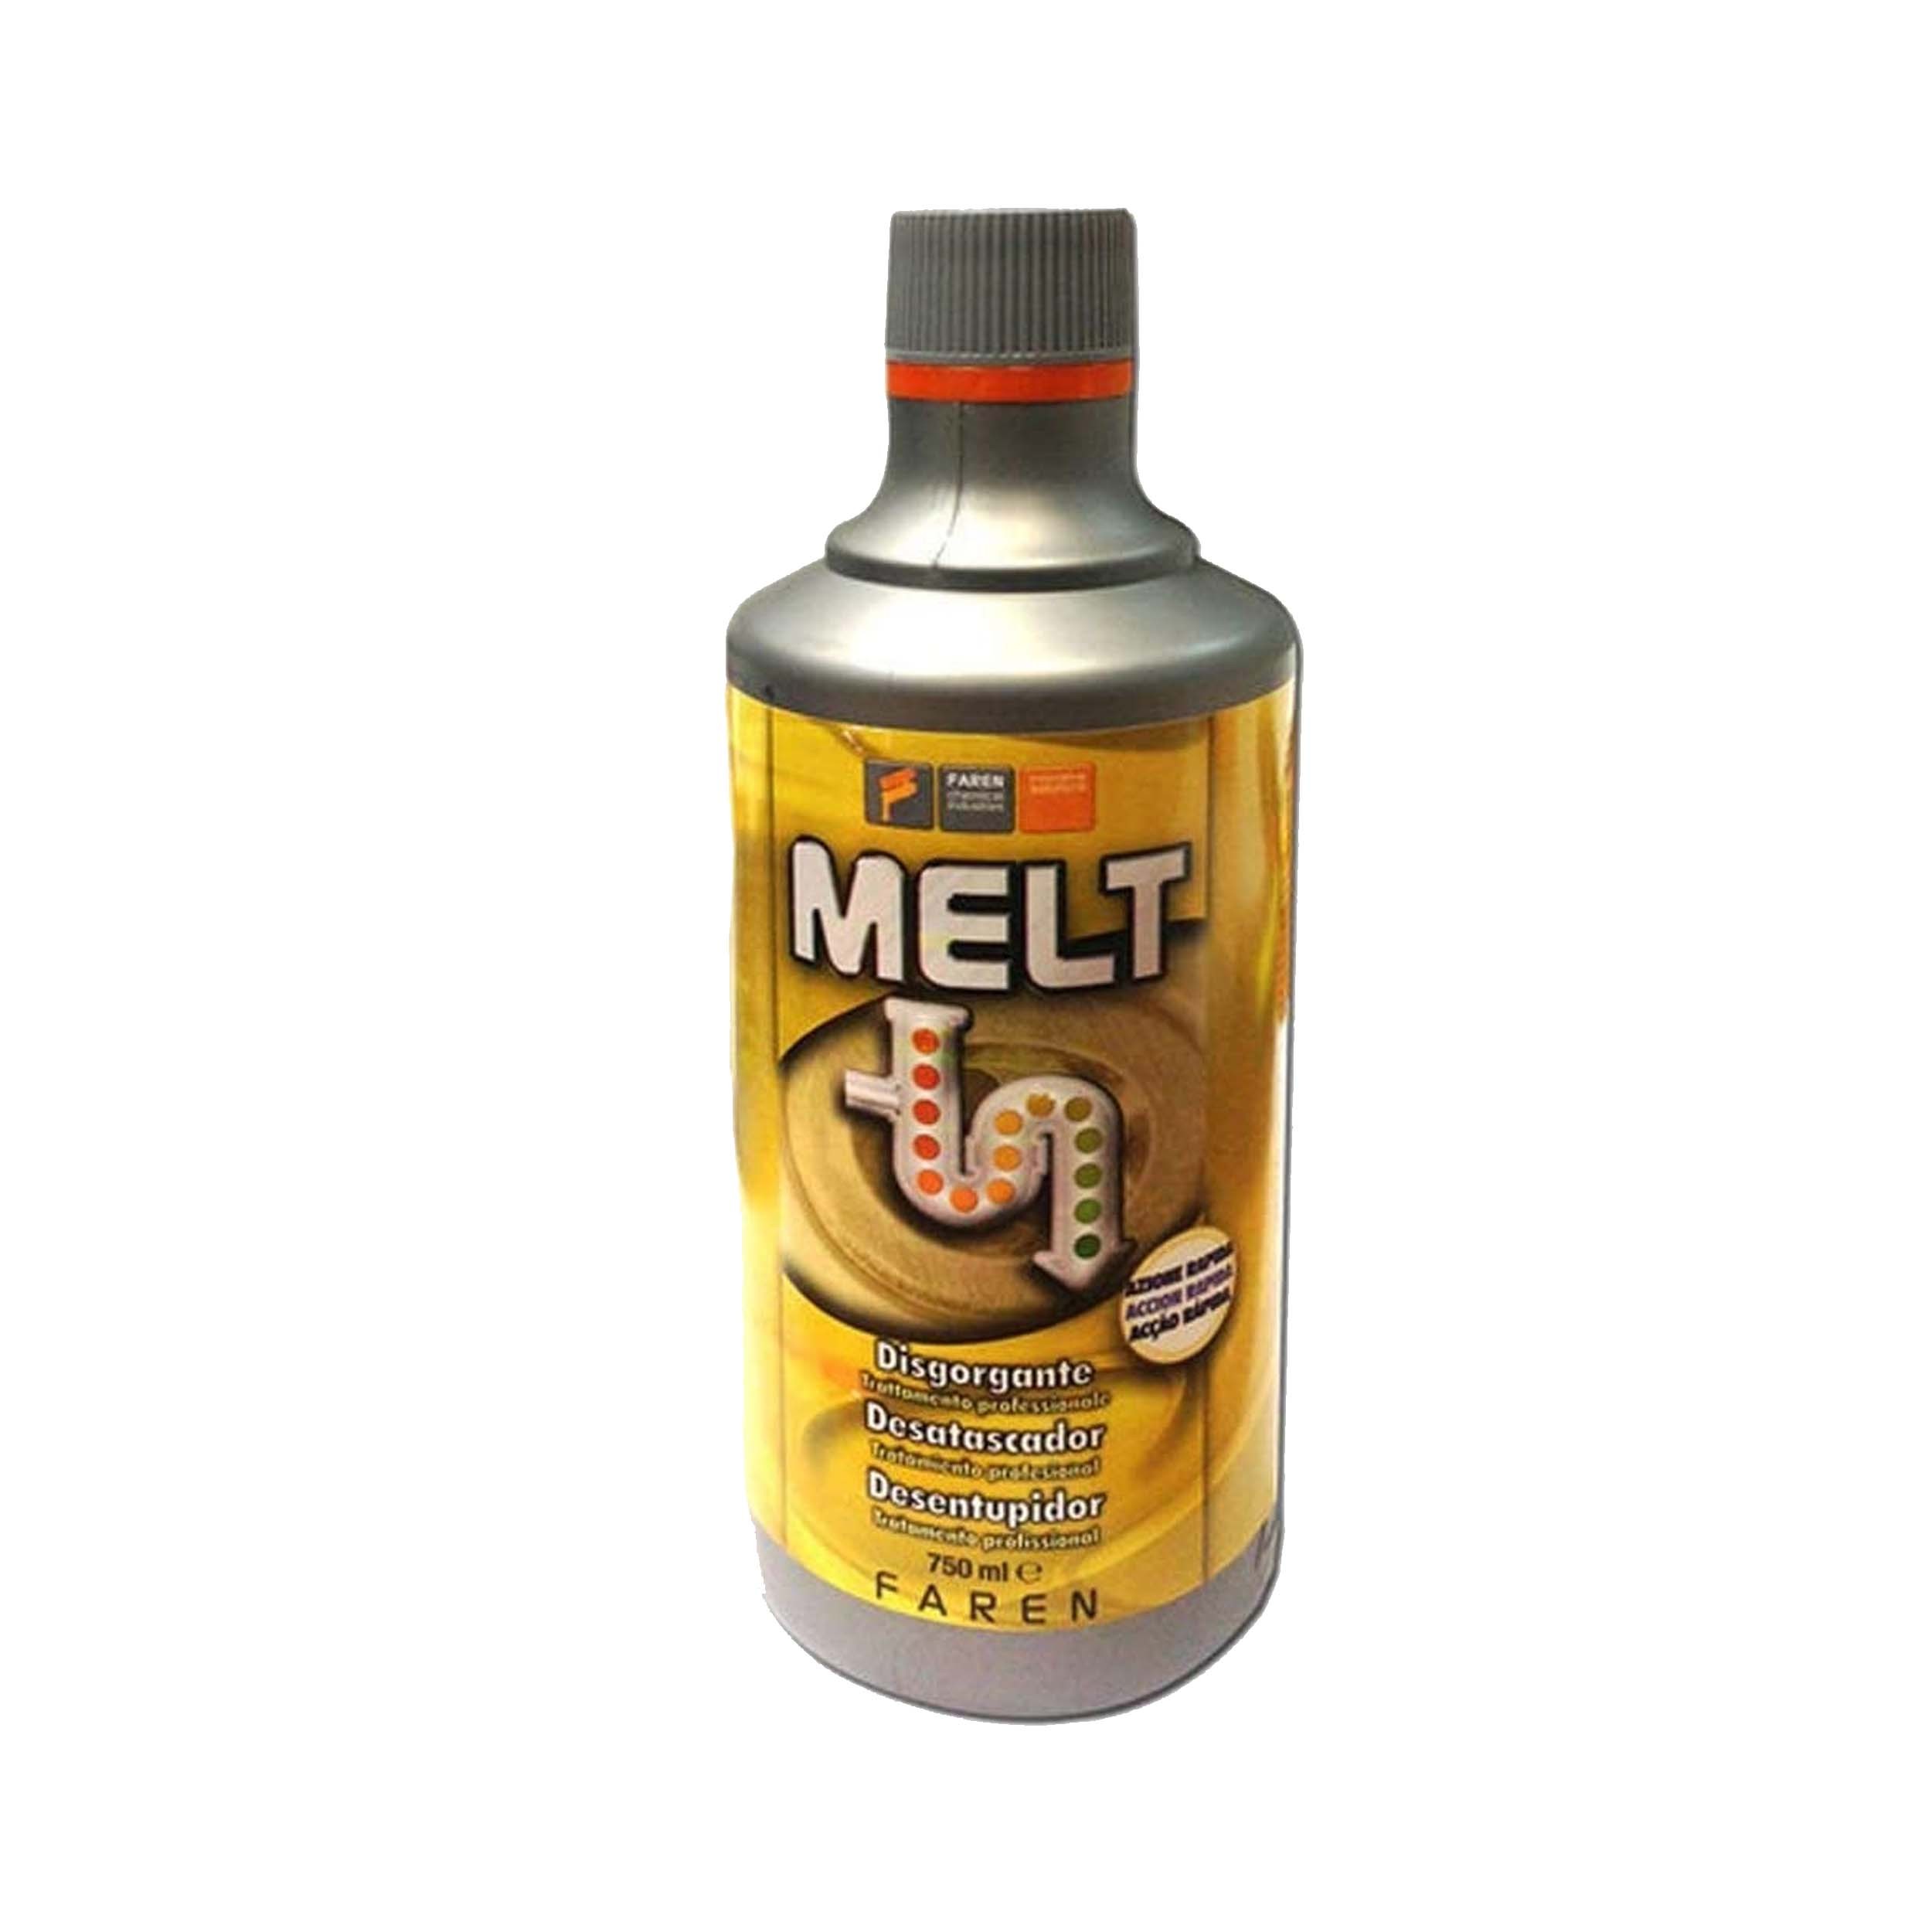 Disgorgante MELT 750 ml